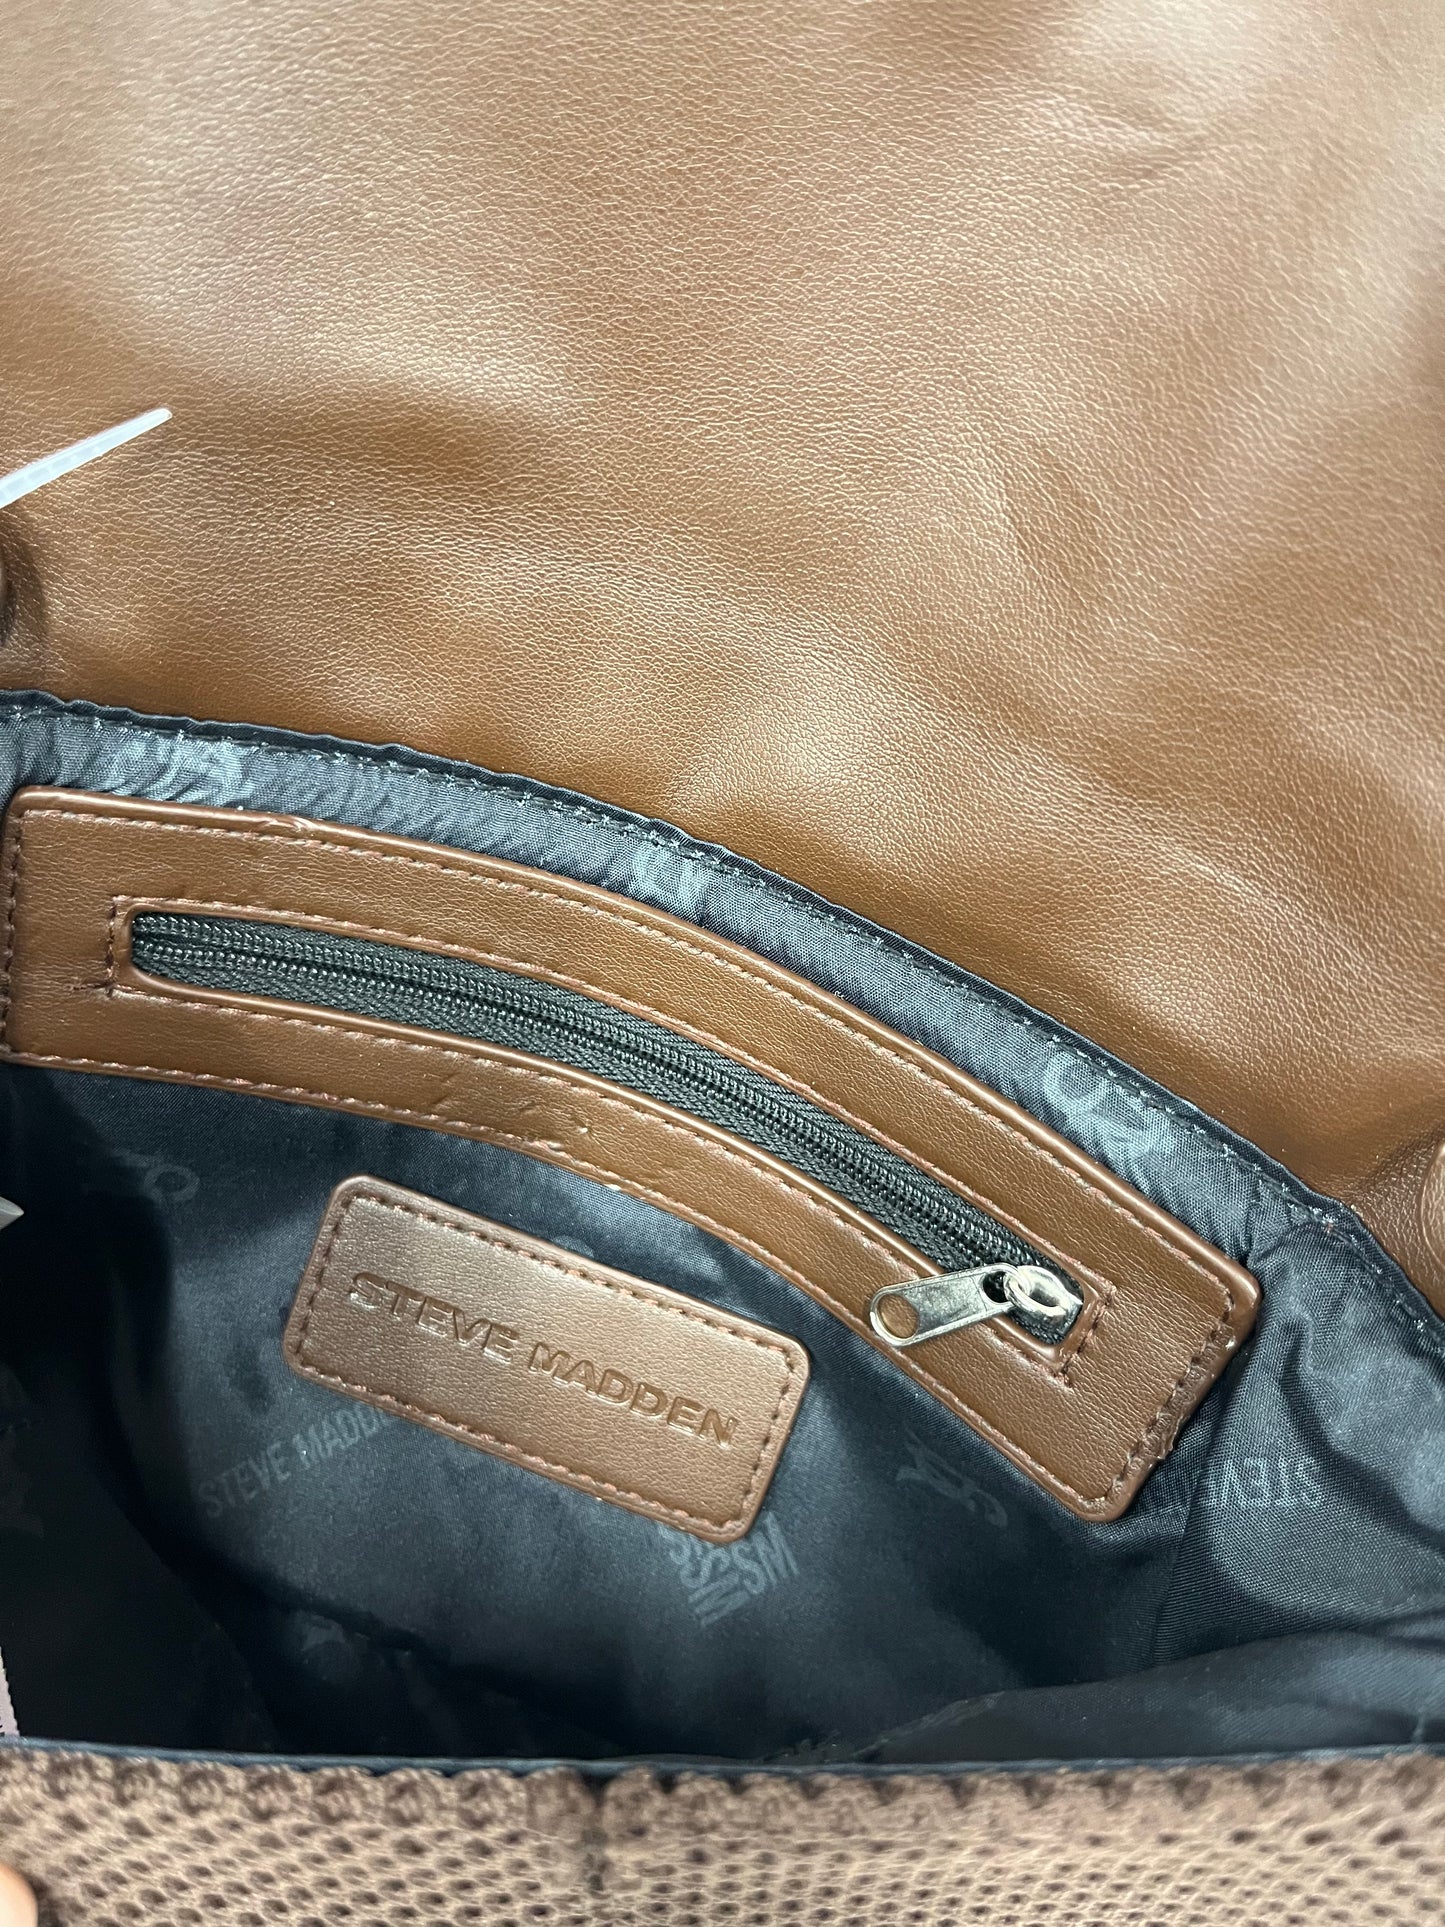 Handbag By Steve Madden  Size: Large